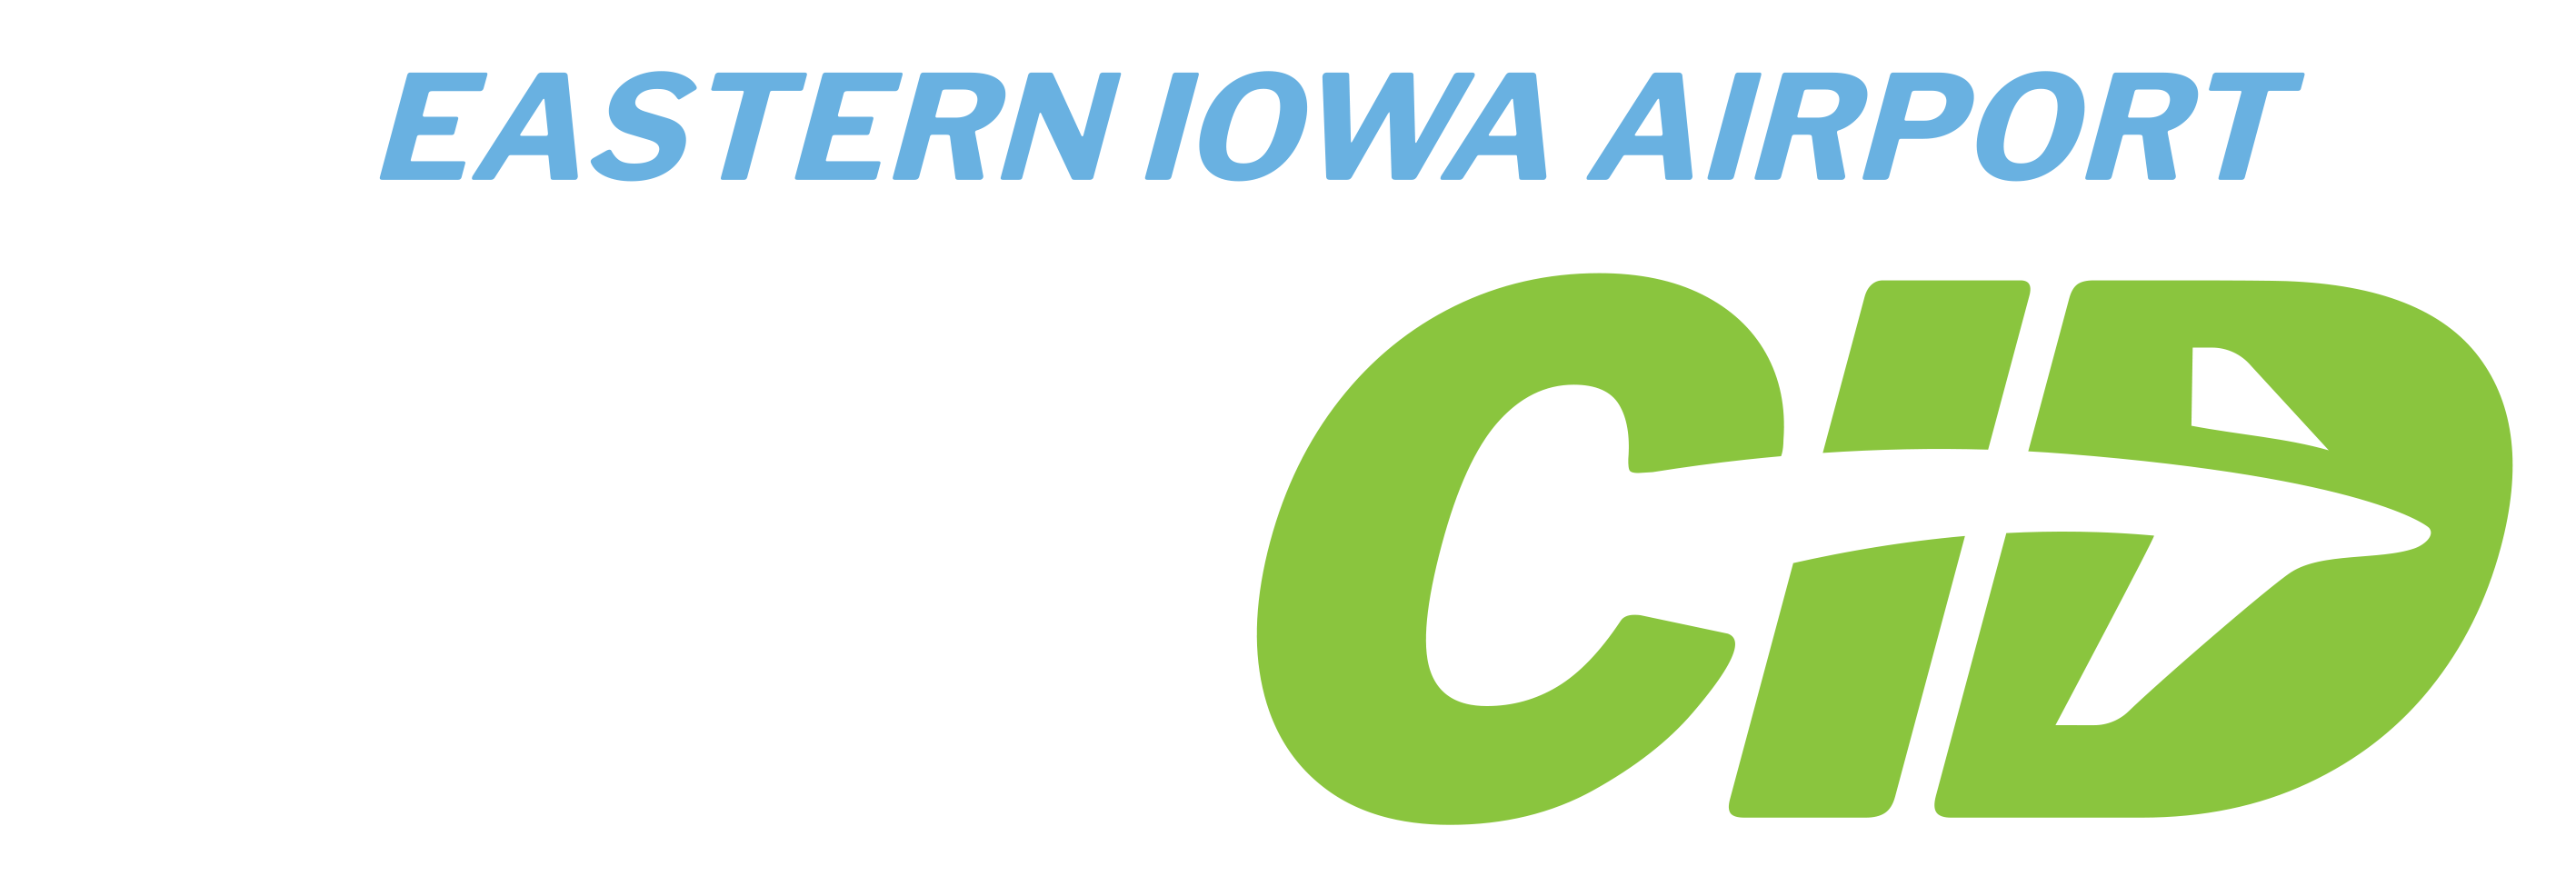 Eastern Iowa Airport Fly CID logo